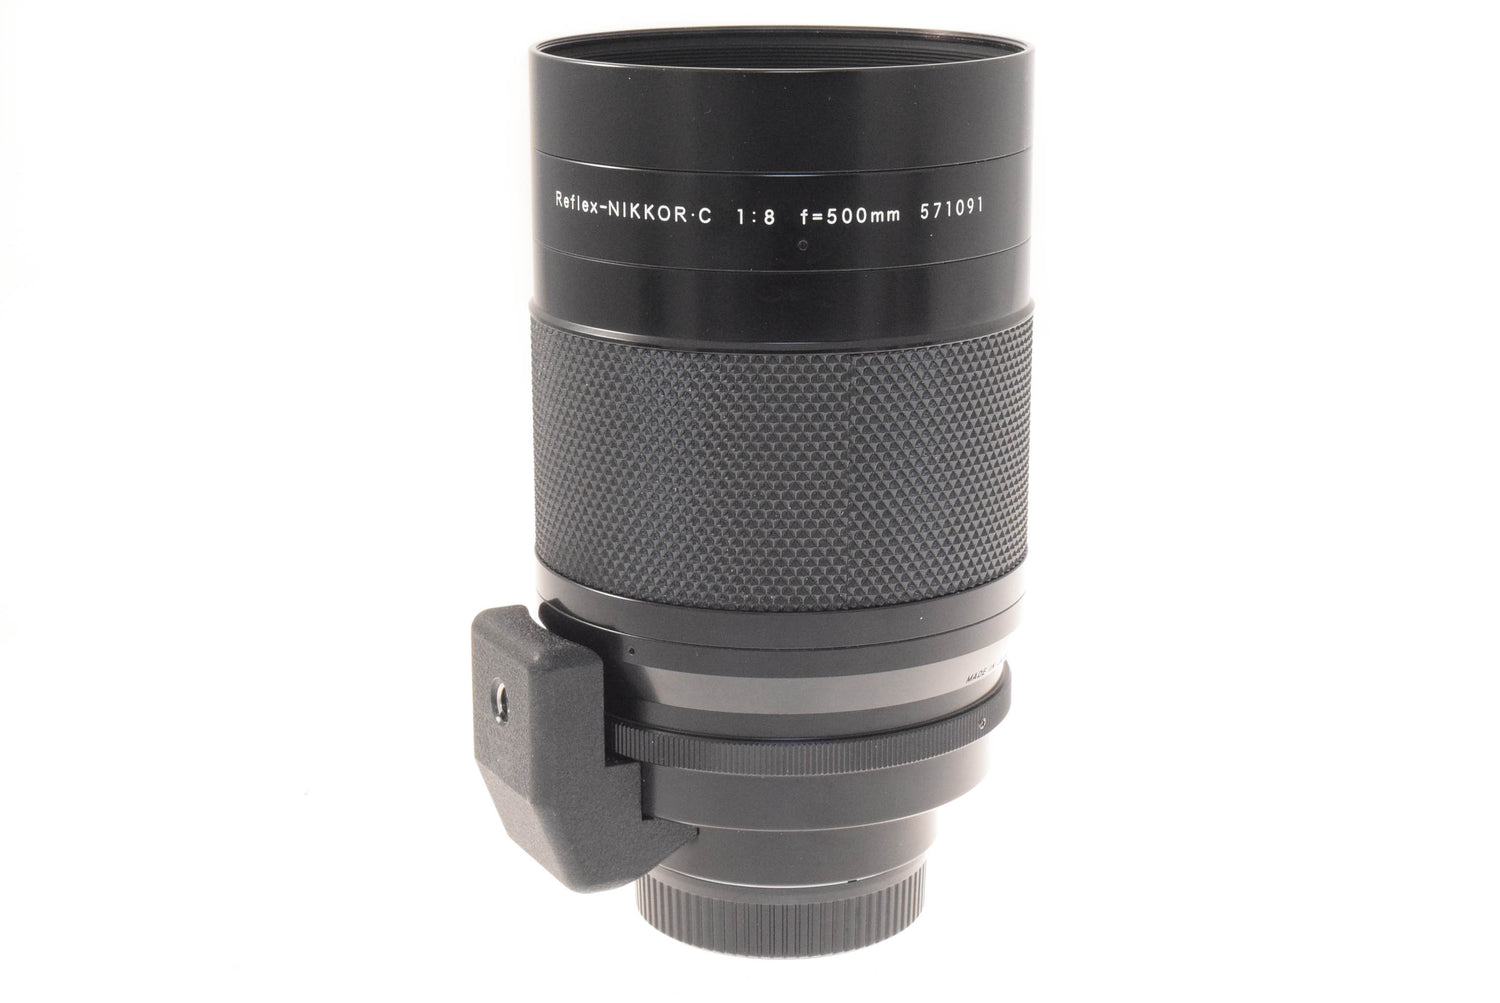 Reflex-NIKKOR 500mm f8 - レンズ(単焦点)